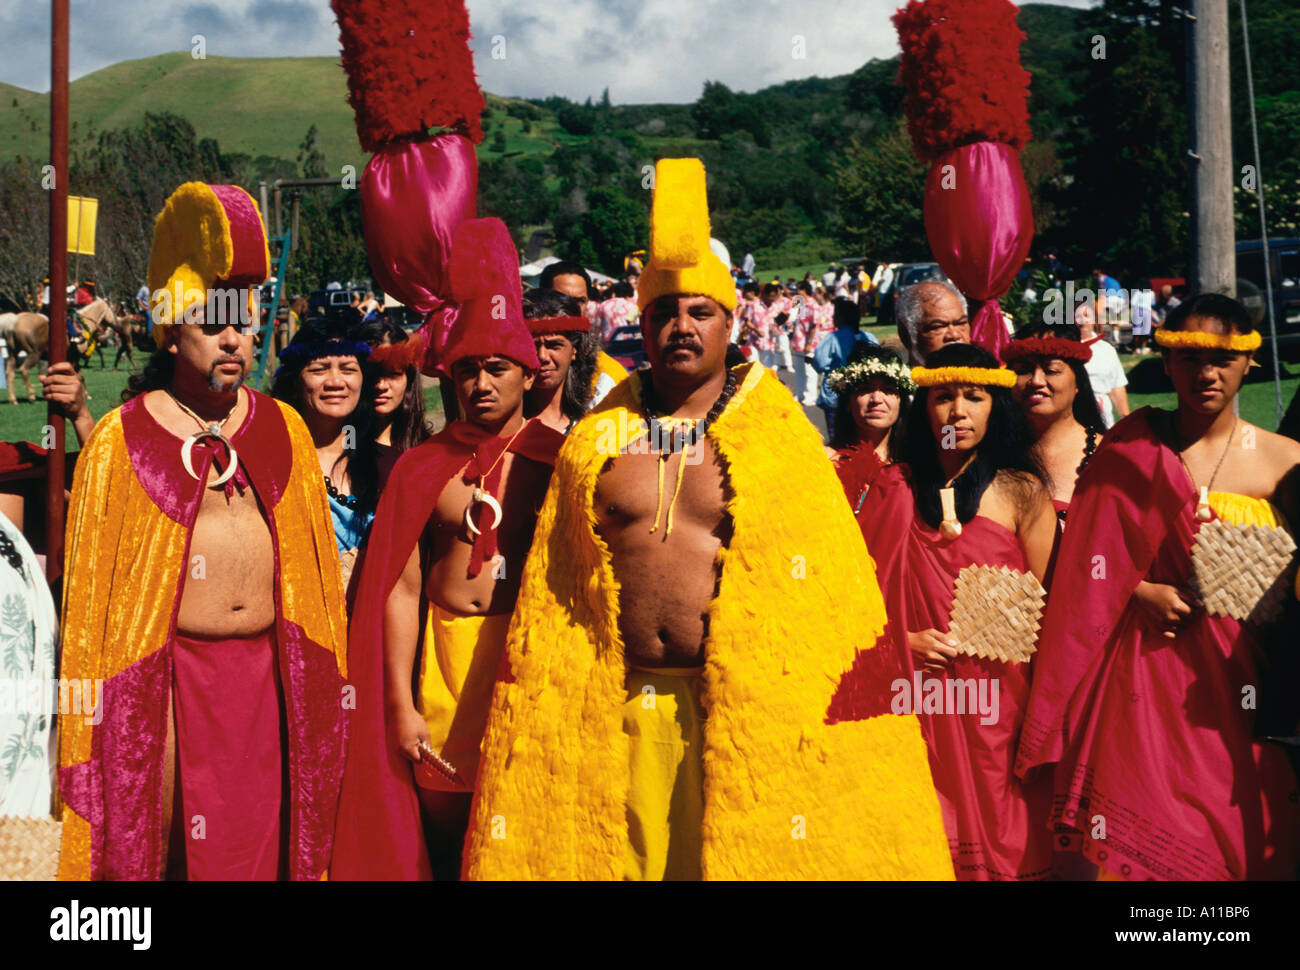 Hawaiianer Hawaiianische Menschen Männer und Frauen an Paniolo Parade während Aloha Festival in Waimea auf Hawaii Insel, Hawaii, United States Stockfoto